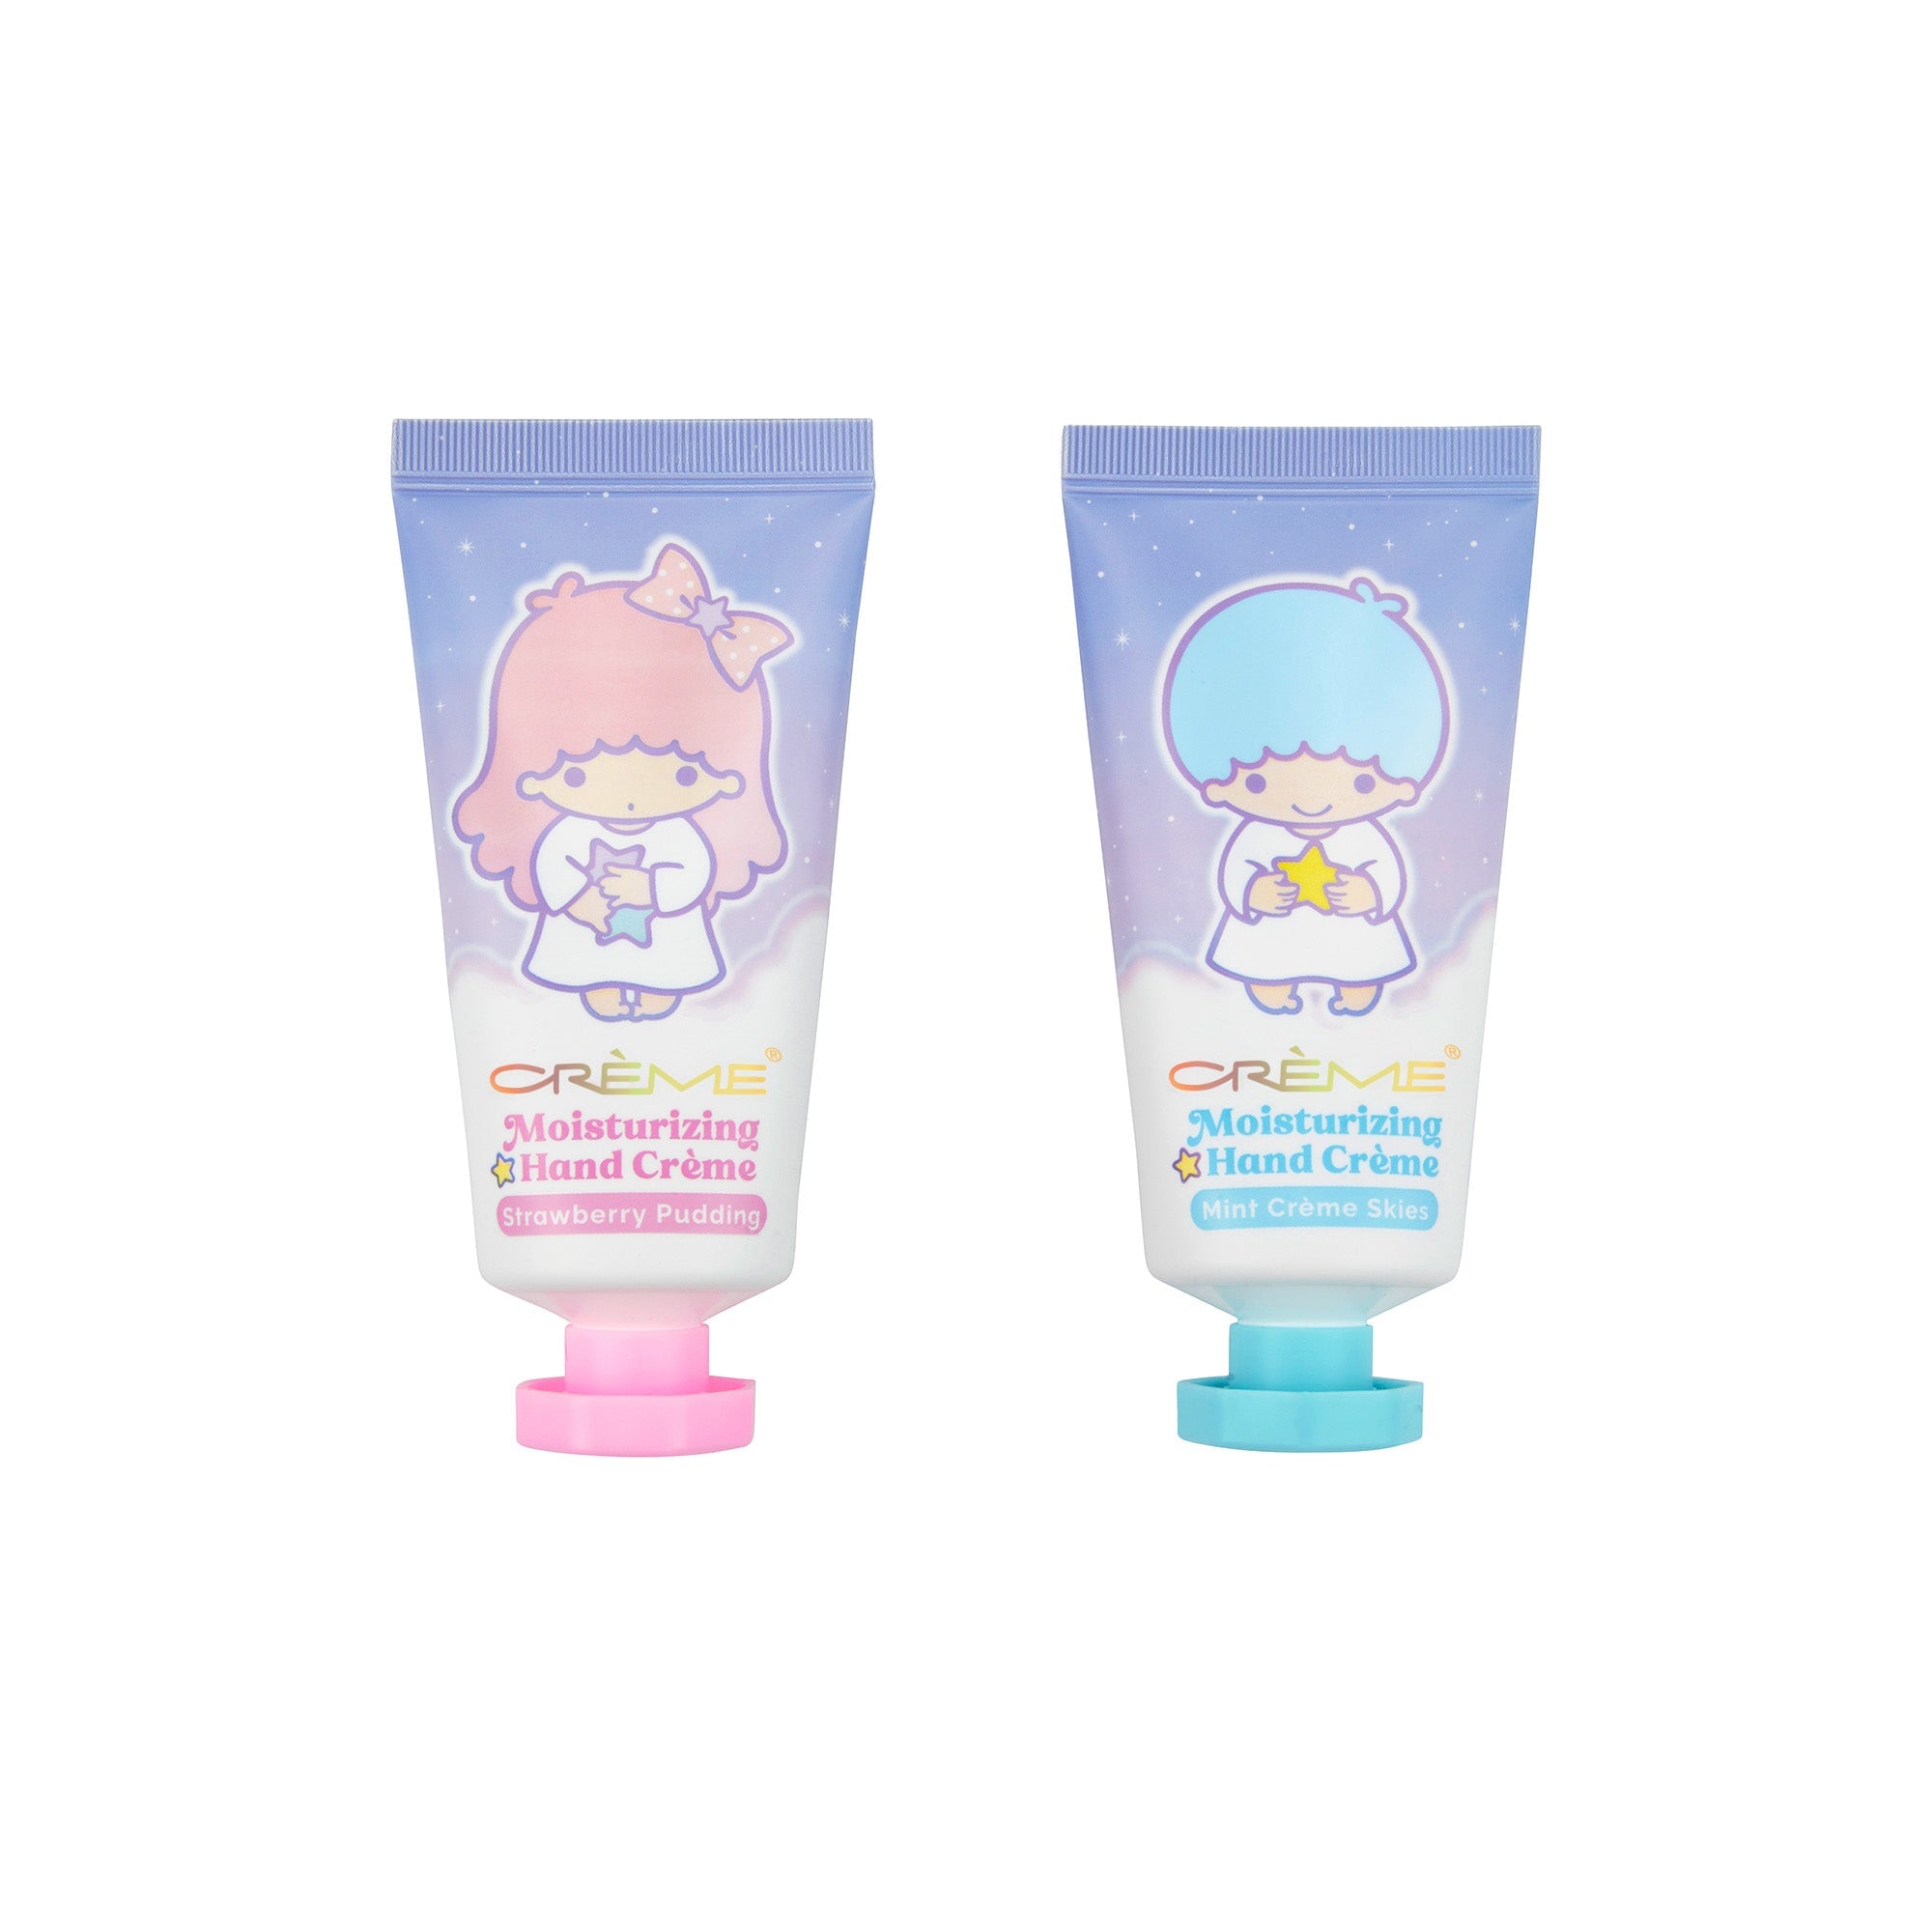 Little Twin Stars Moisturizing Hand Crème Duo Hand Creams The Crème Shop x Sanrio 